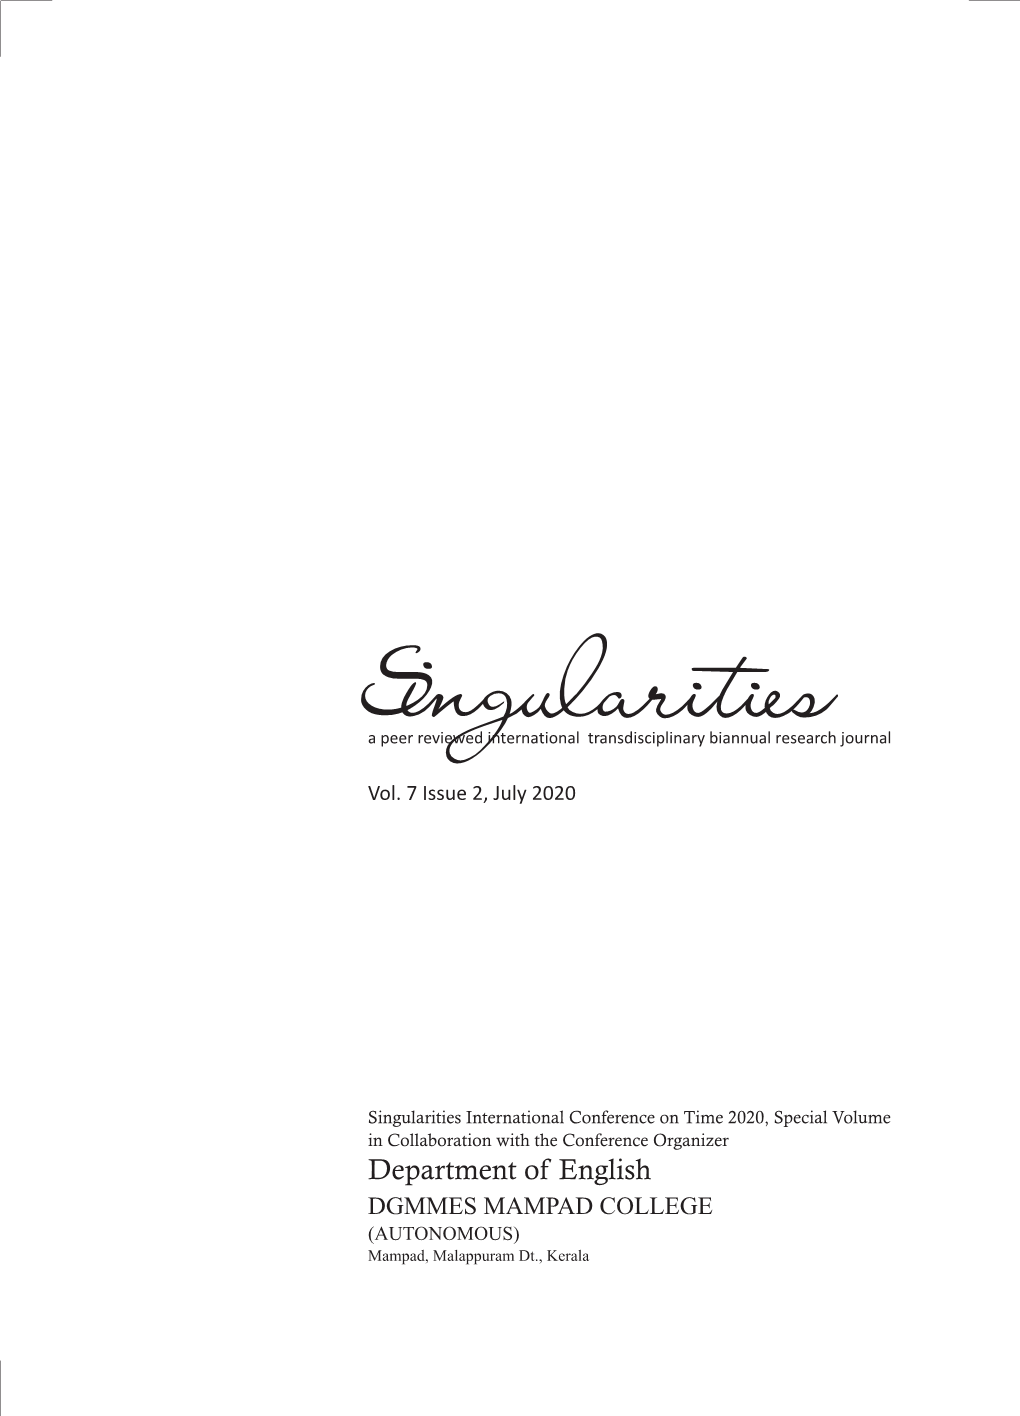 Singularities Vol 7 Issue 2